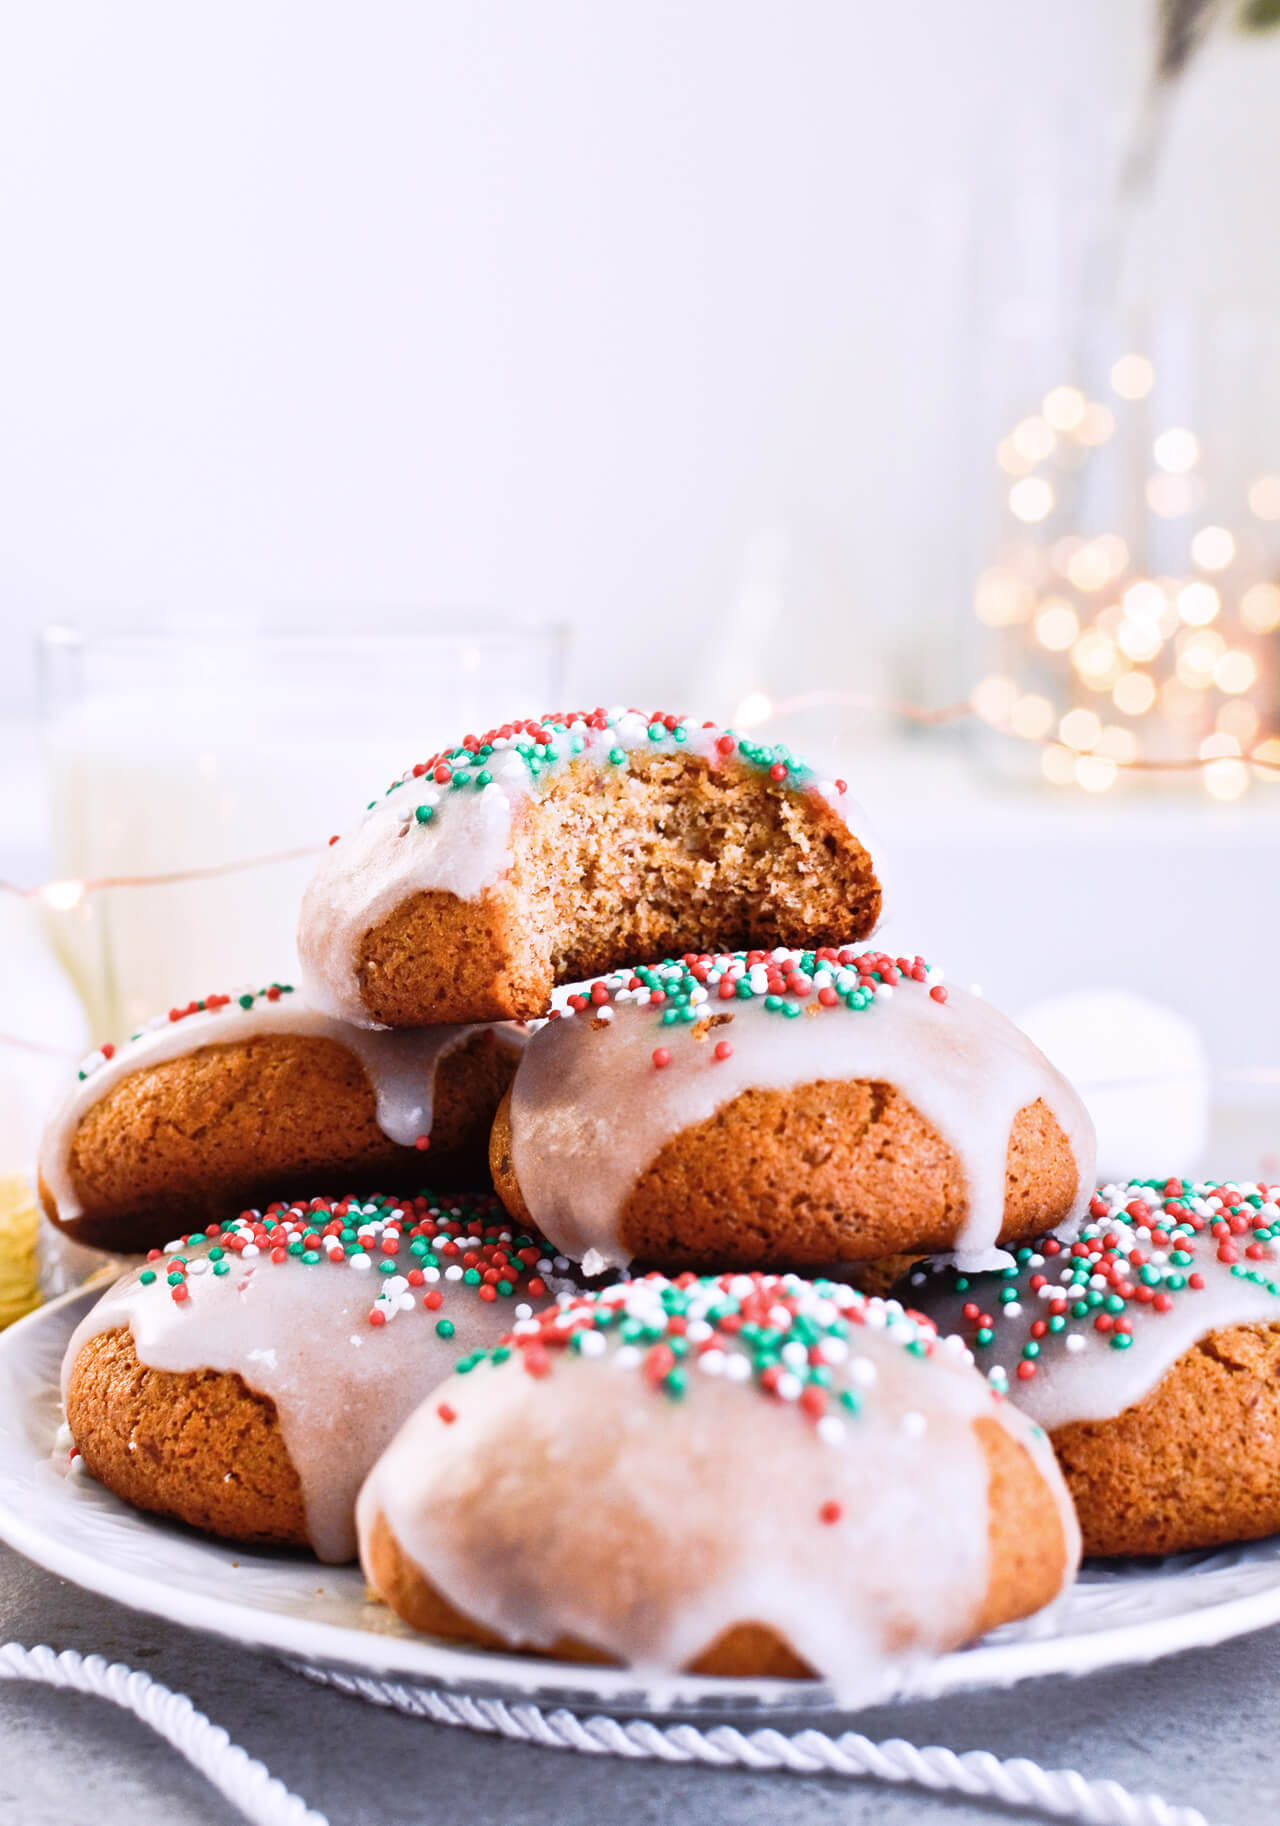 Sugar glazed lebkuchen (German Christmas cookies)